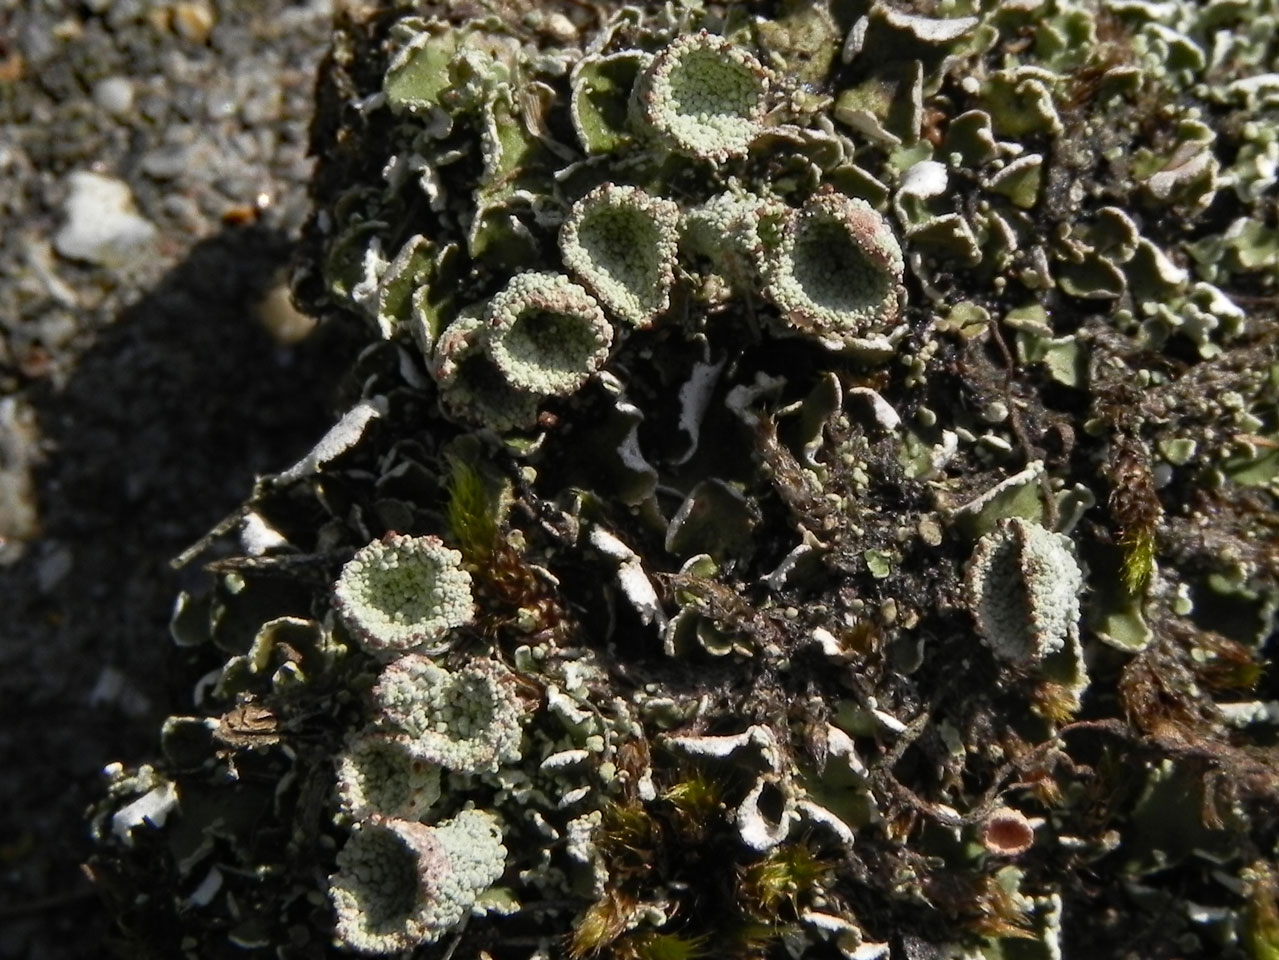 Cladonia humilis schizidiate morph, Yew Tree Heath, New Forest